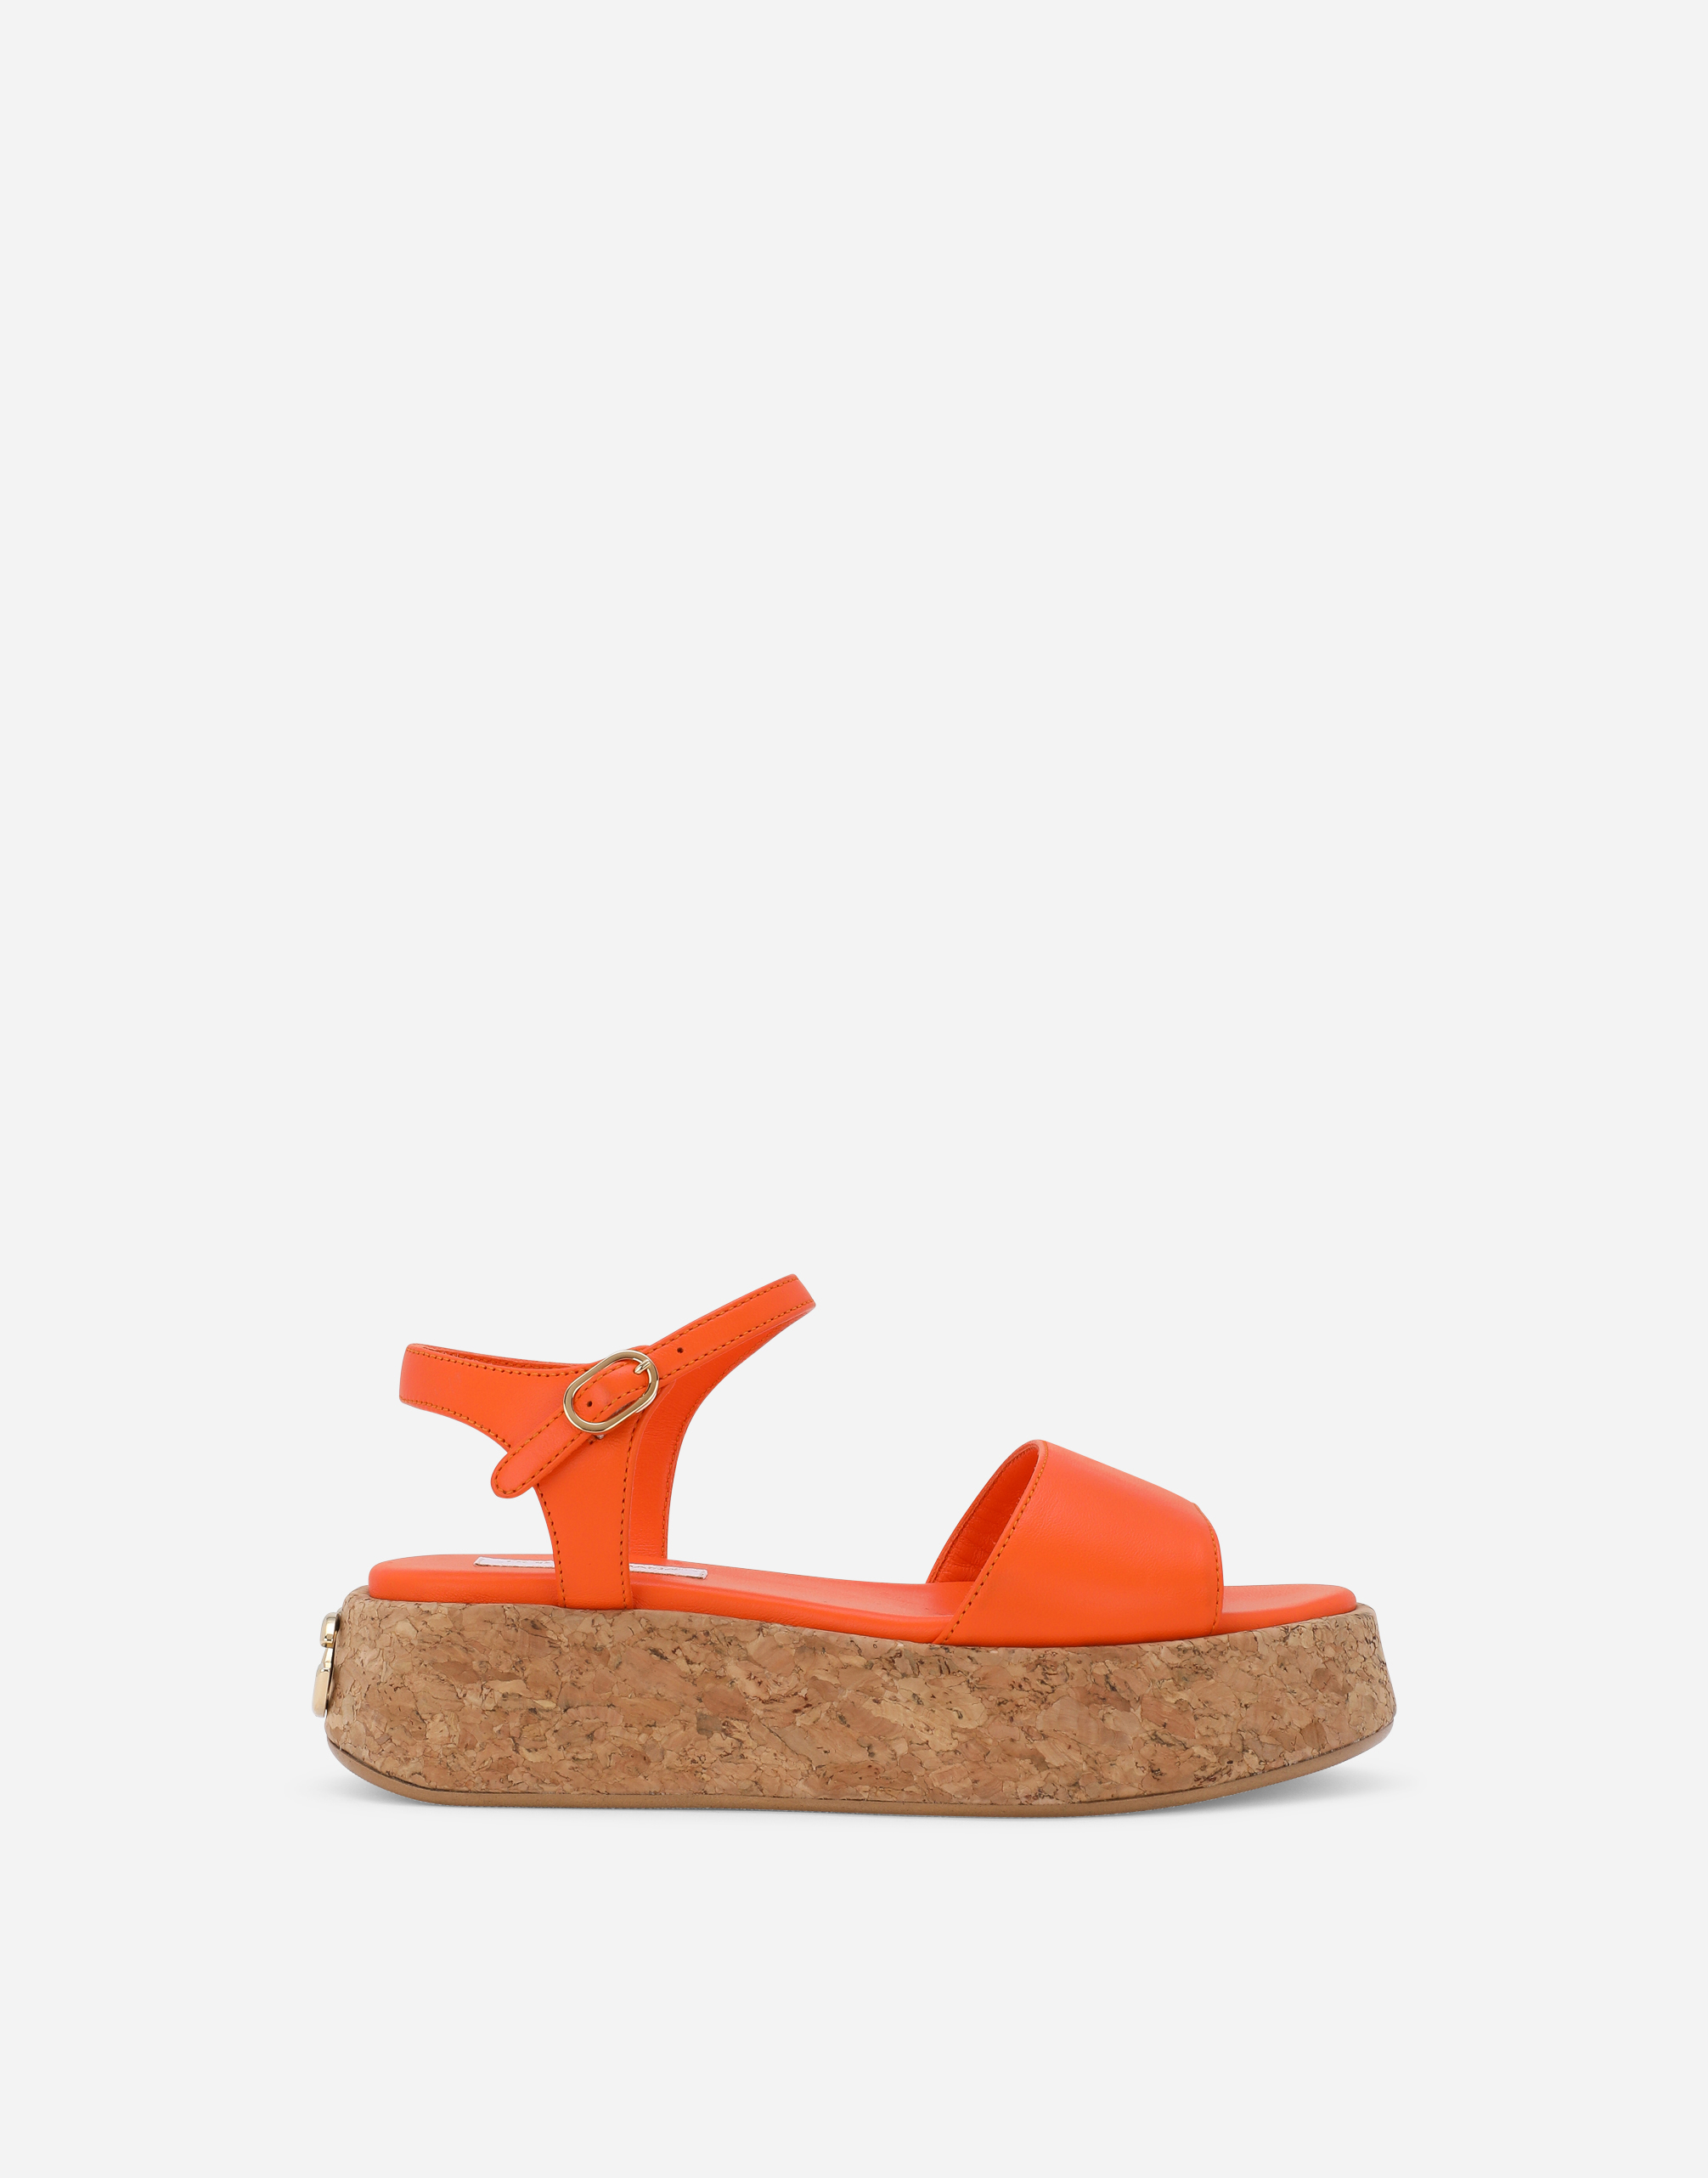 Nappa leather wedge sandals in Orange